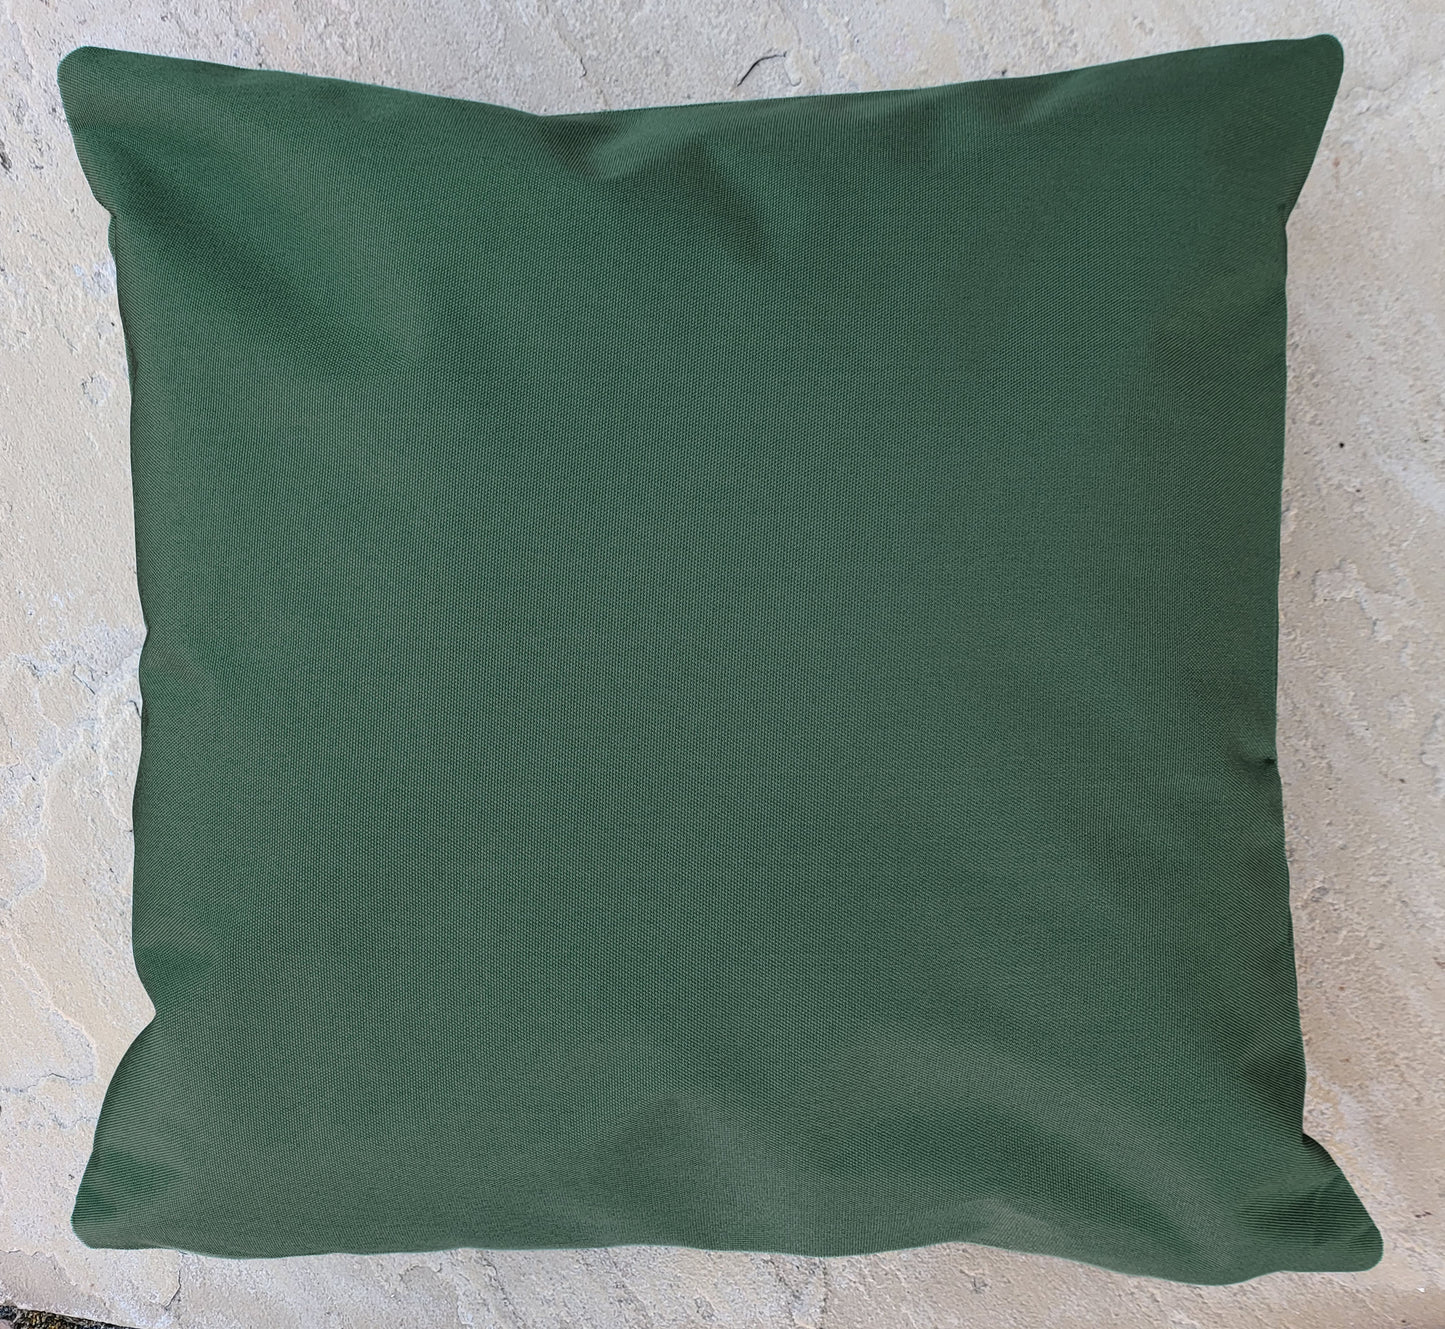 Outdoor Waterproof Garden Rattan Chair Cushions Or Covers Green